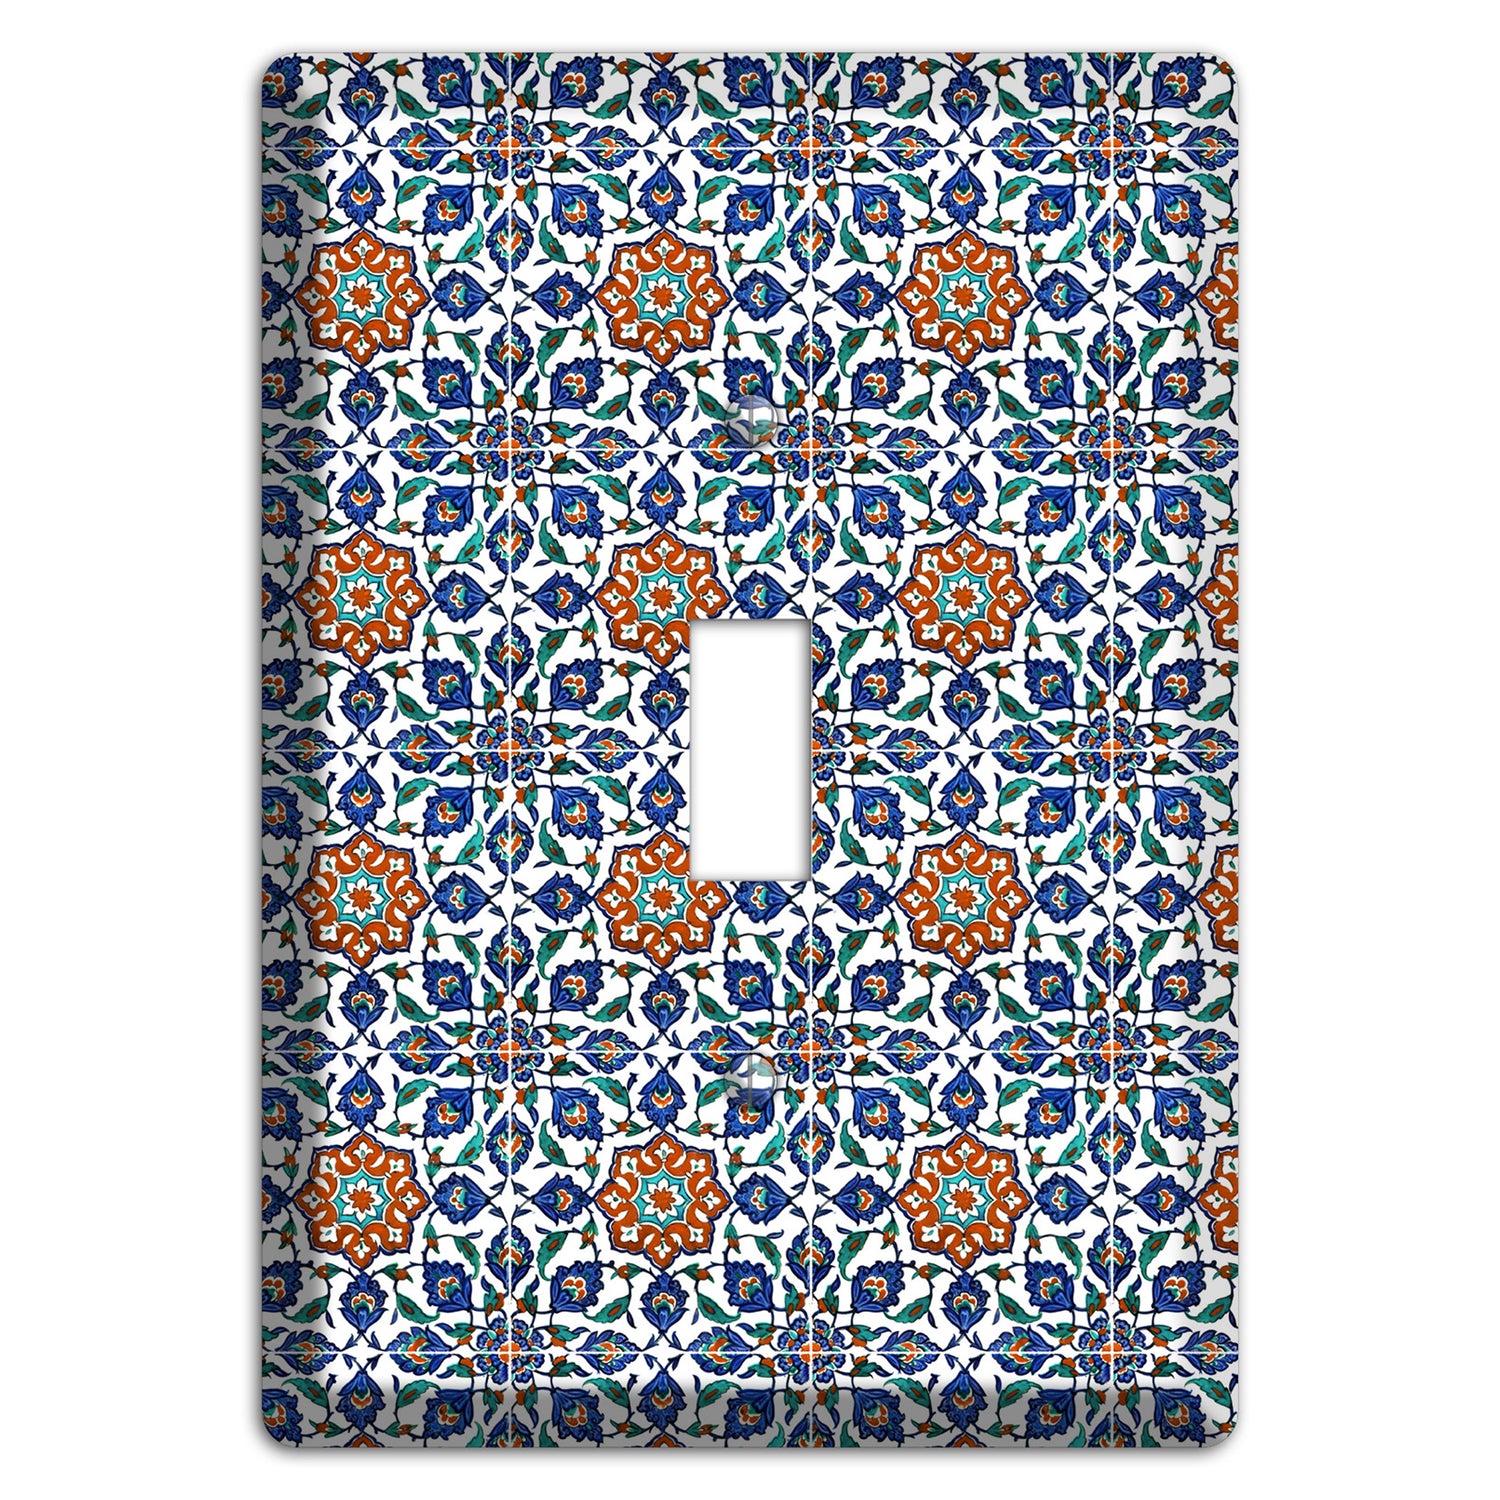 Ornate Floral Tile Cover Plates